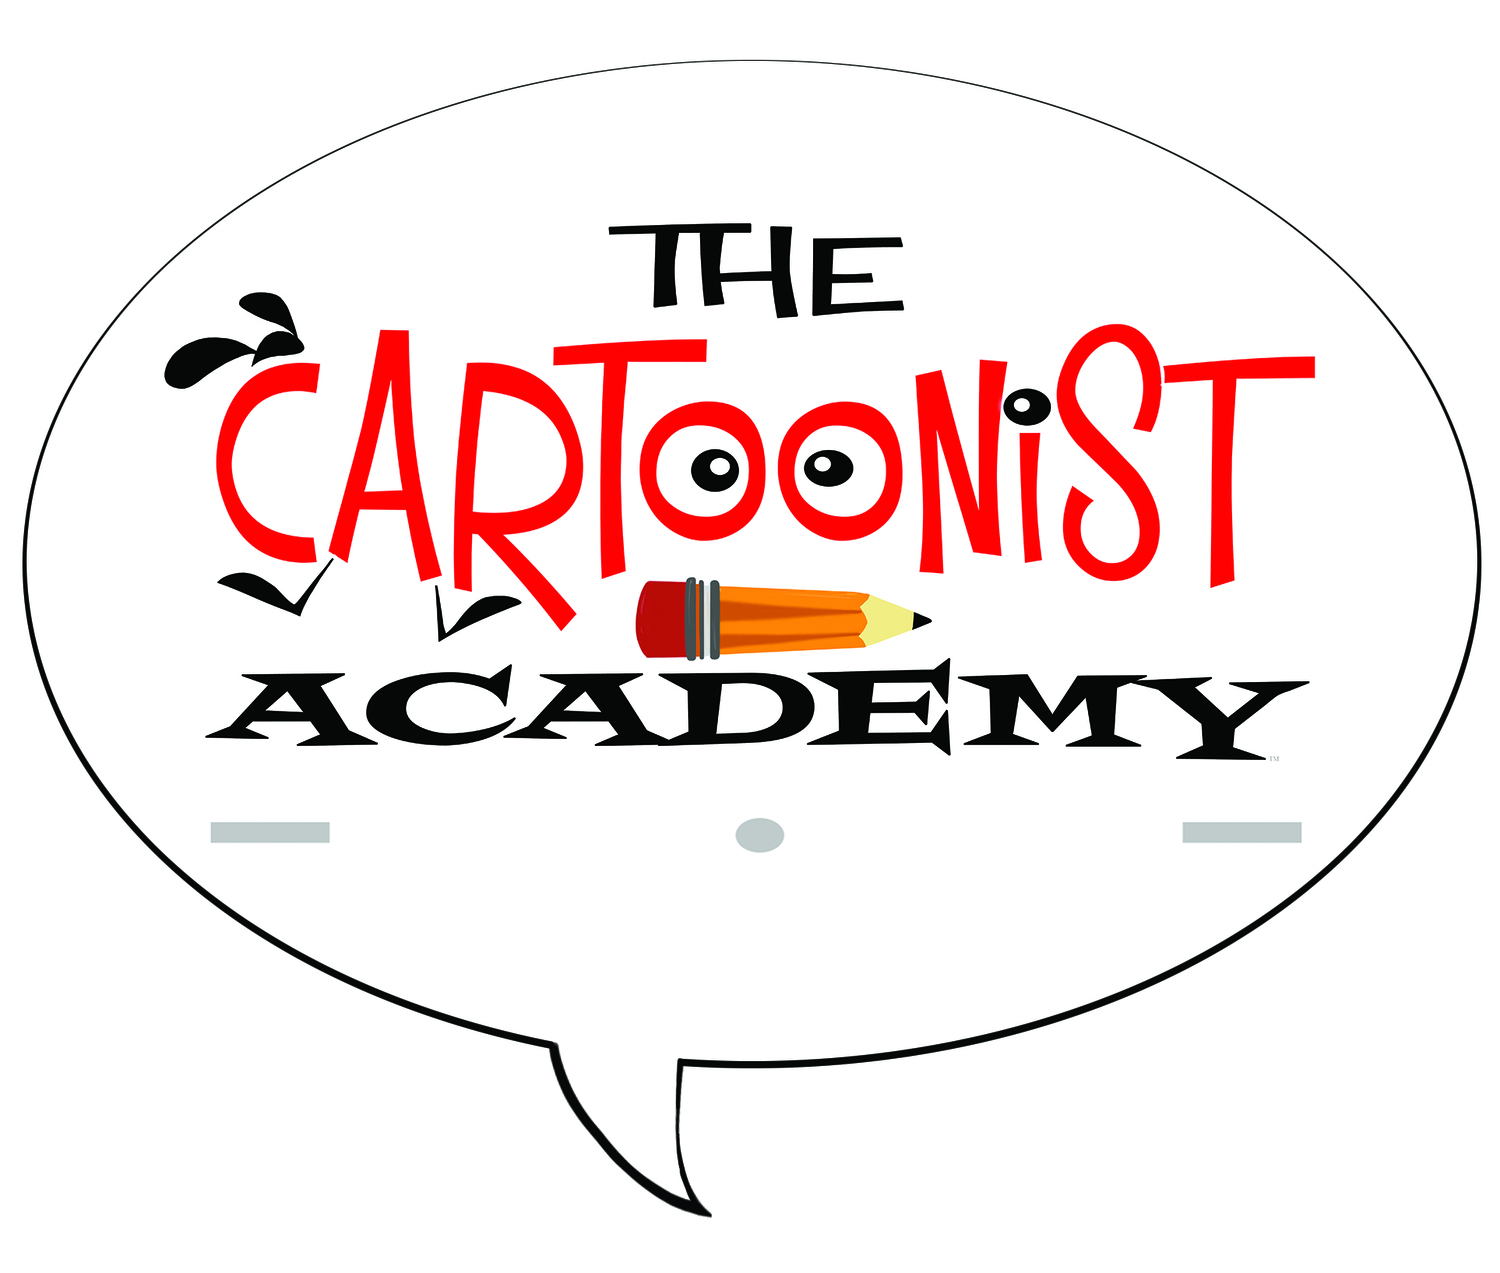 The Cartoonist Academy